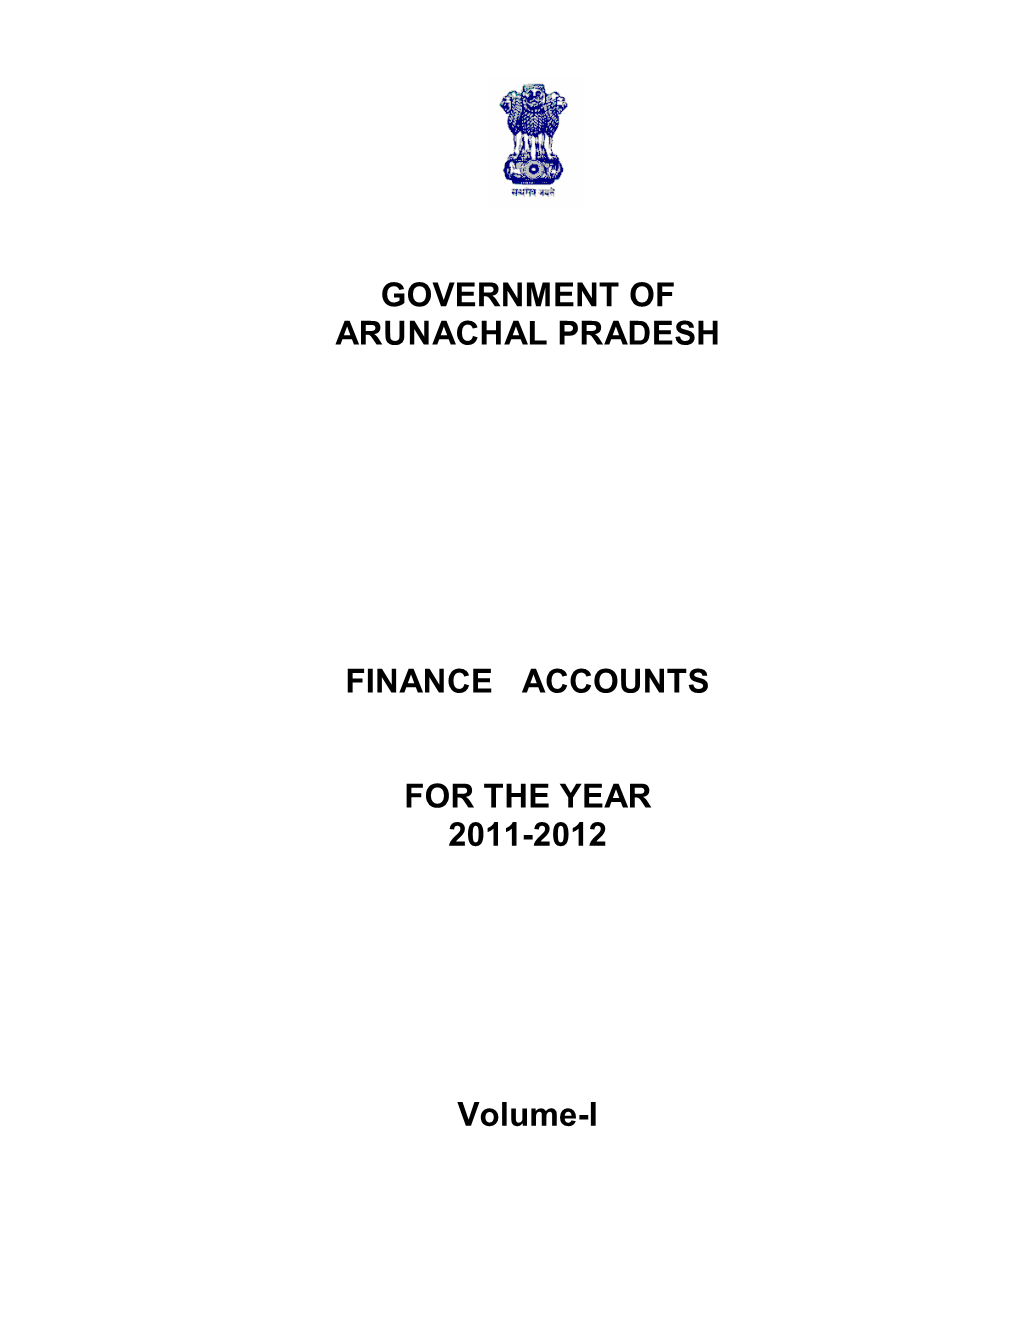 Government of Arunachal Pradesh Finance Accounts